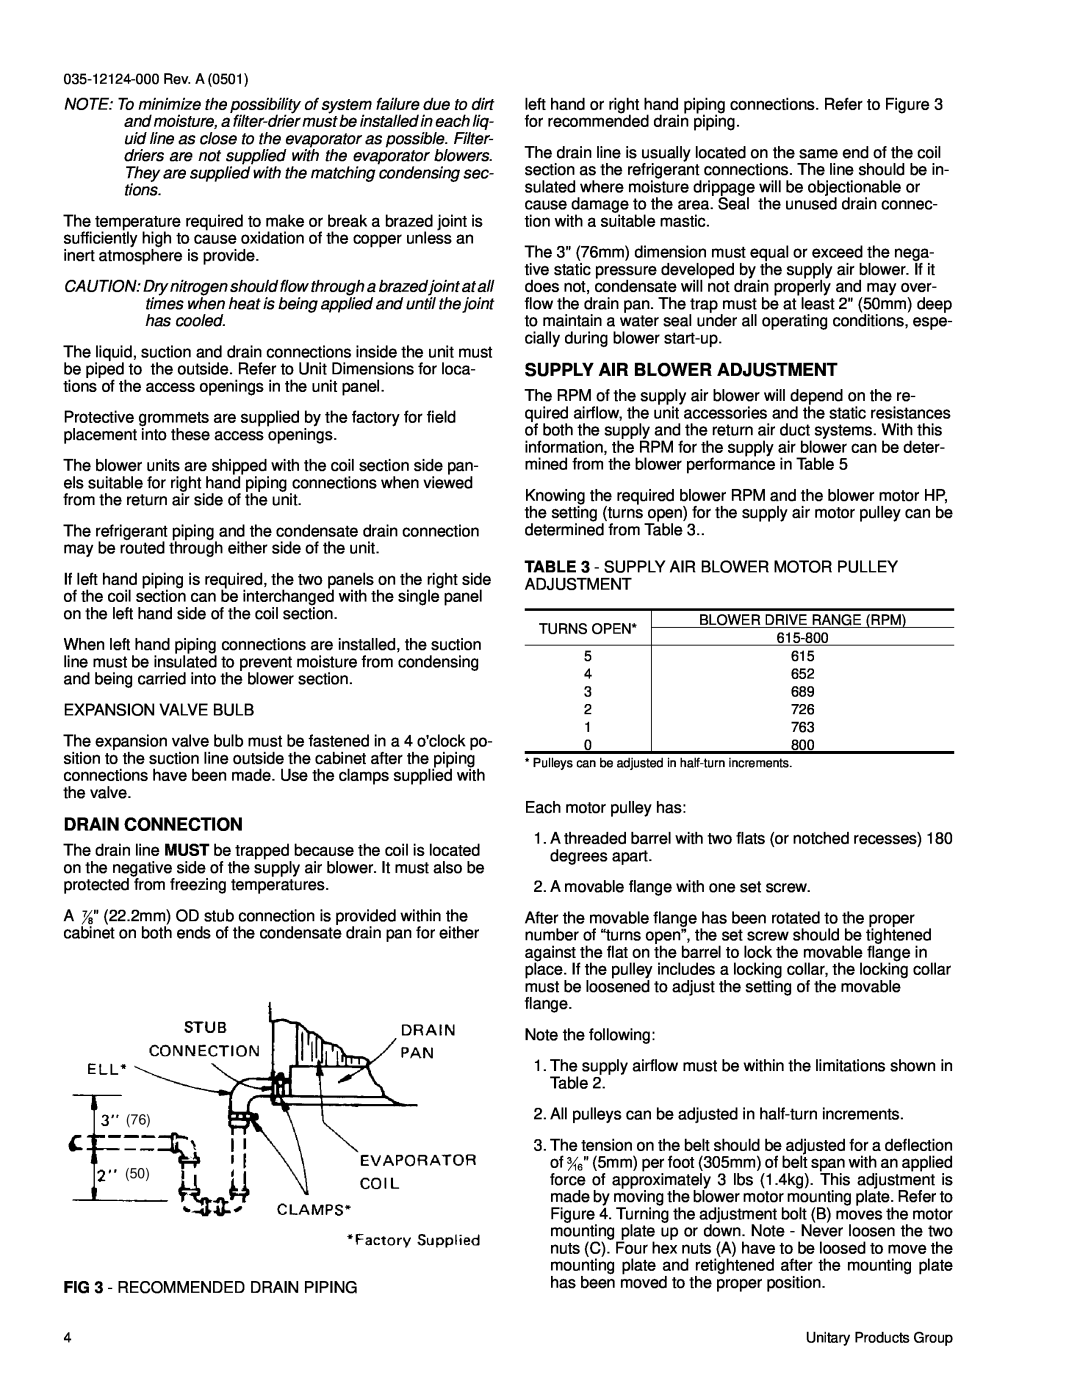 York K3EU180A50 installation instructions Drain Connection, Supply Air Blower Adjustment 